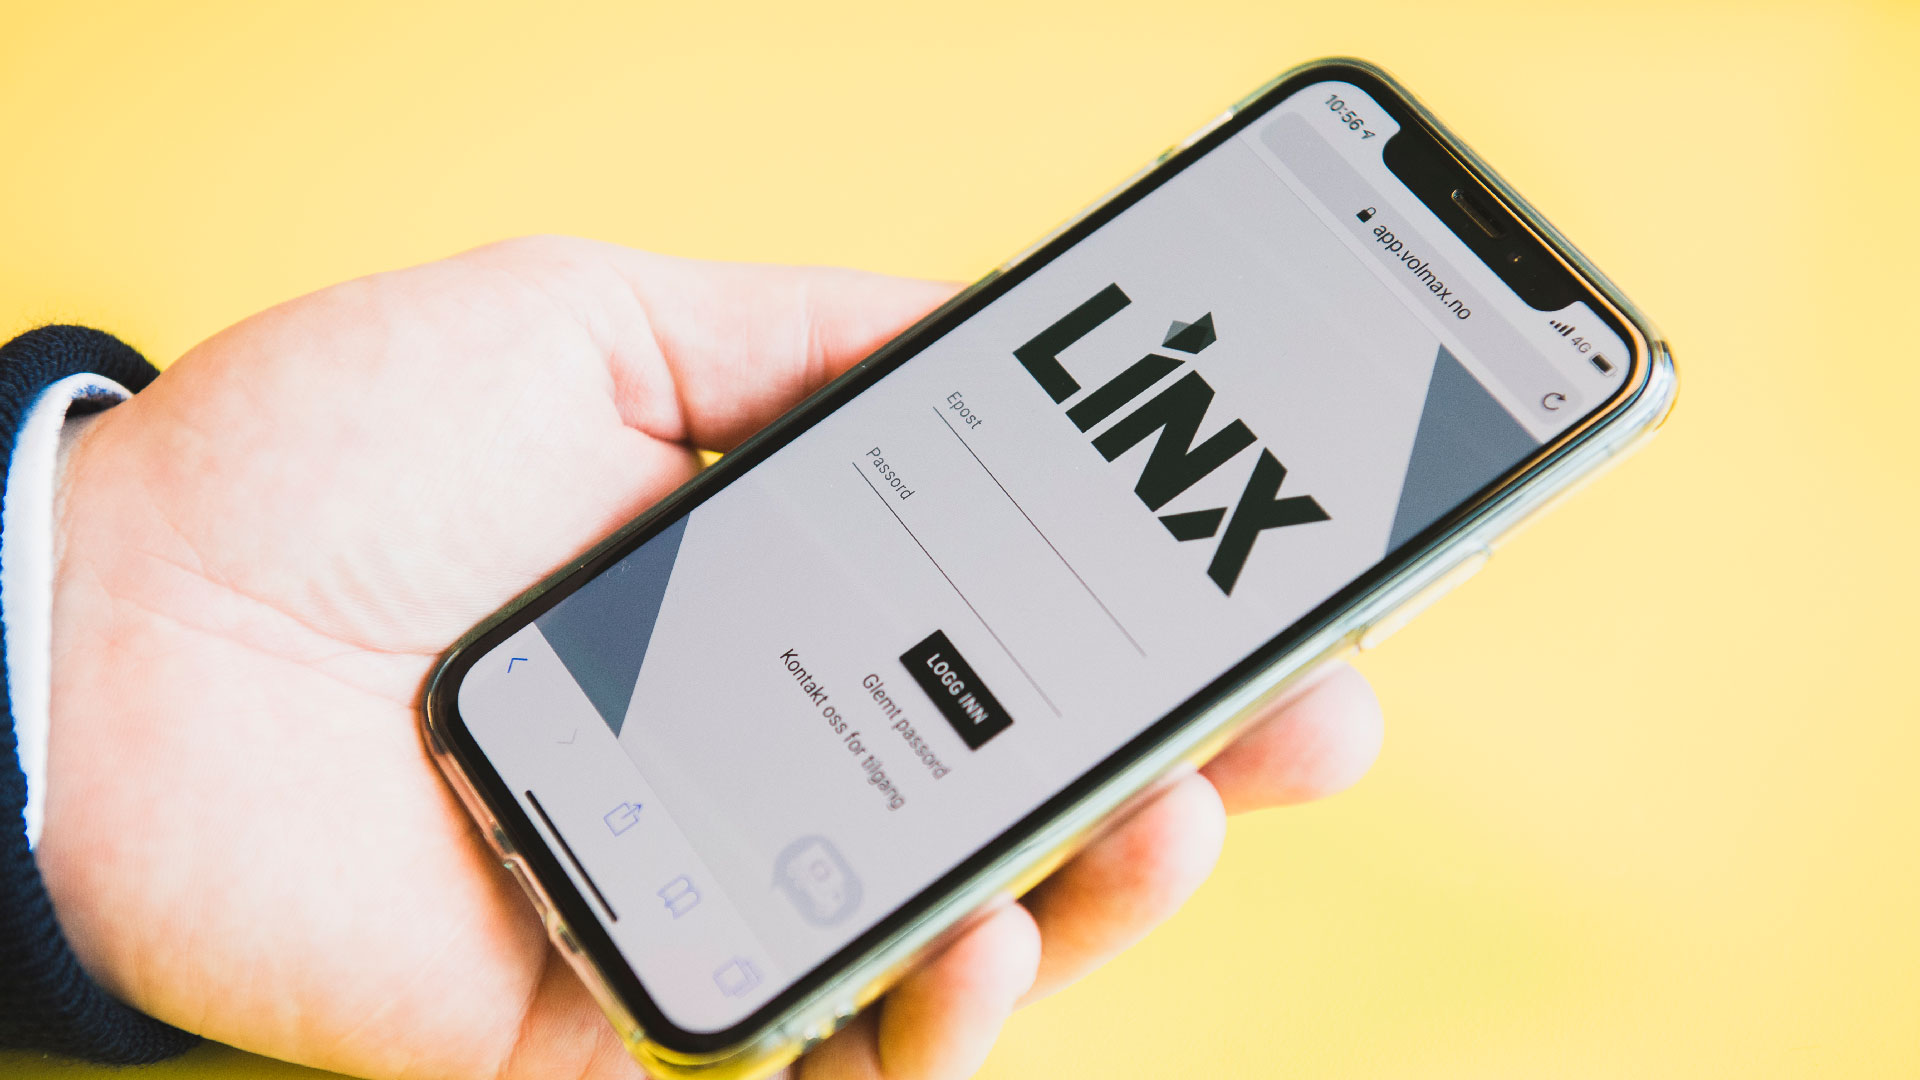 Hånd med telefon viser LINX